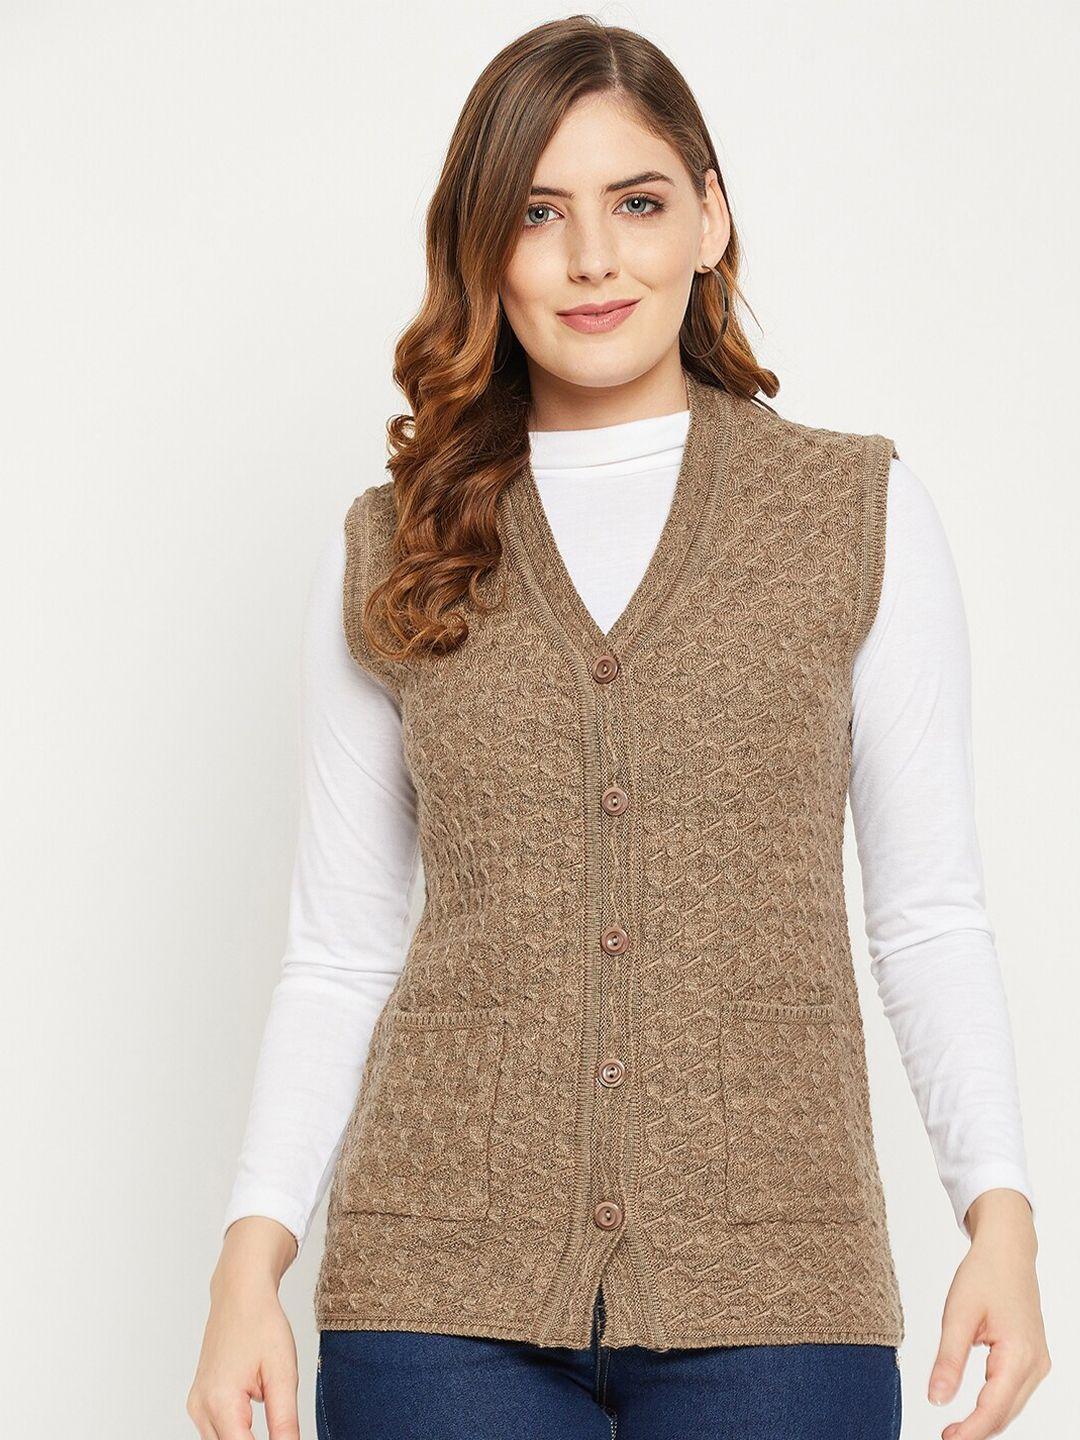 zigo-women-olive-green-self-design-cable-knit-wool-cardigan-sweater